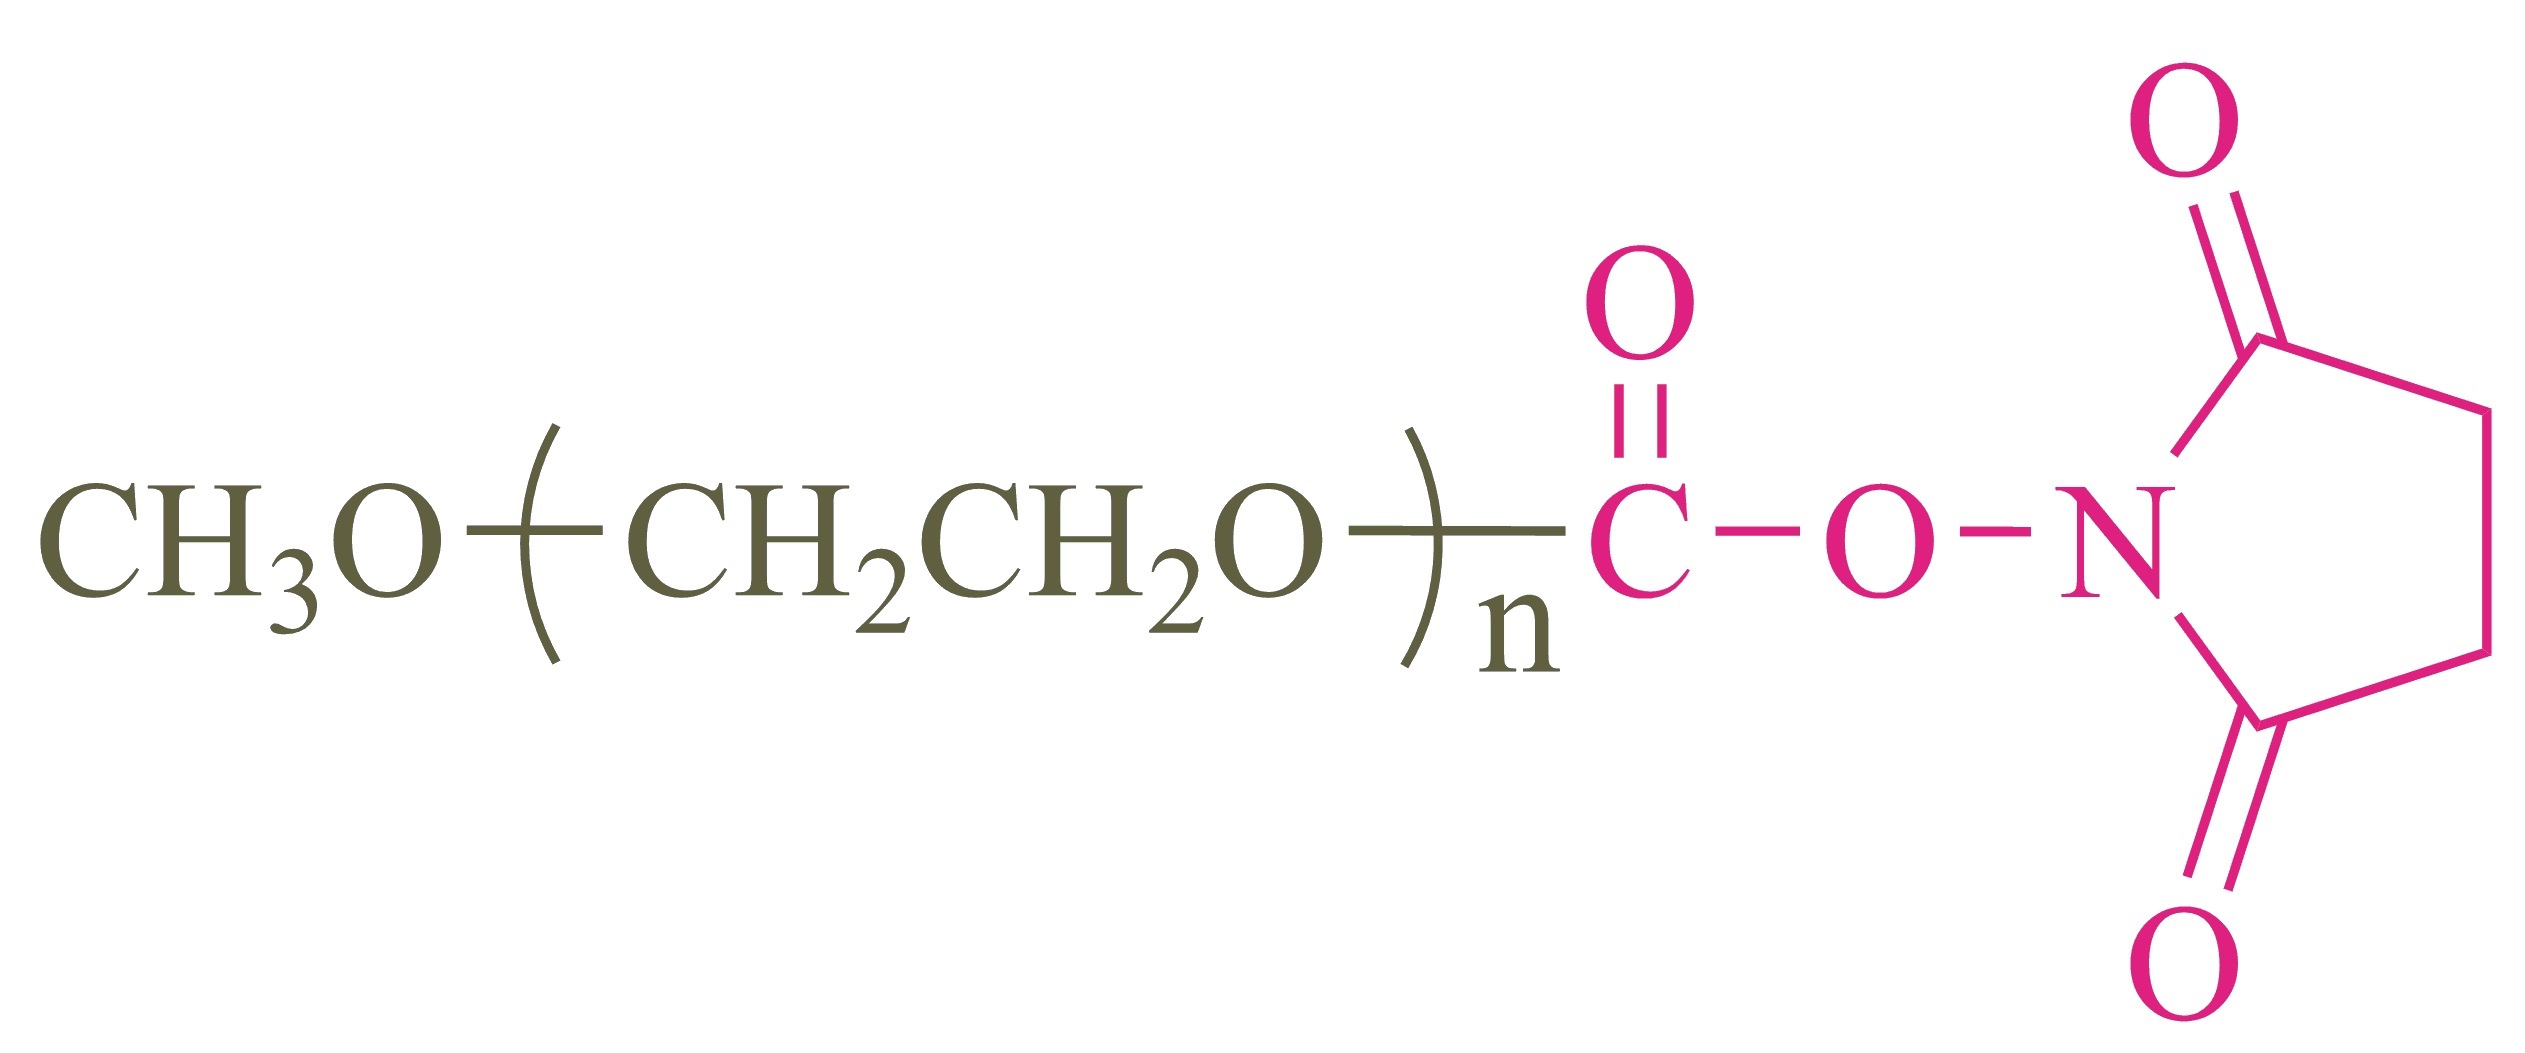 甲氧基聚乙二醇琥珀酰亚胺碳酸酯，mPEG-SC，Methoxypoly(ethylene glycol) succinimidyl carbonate